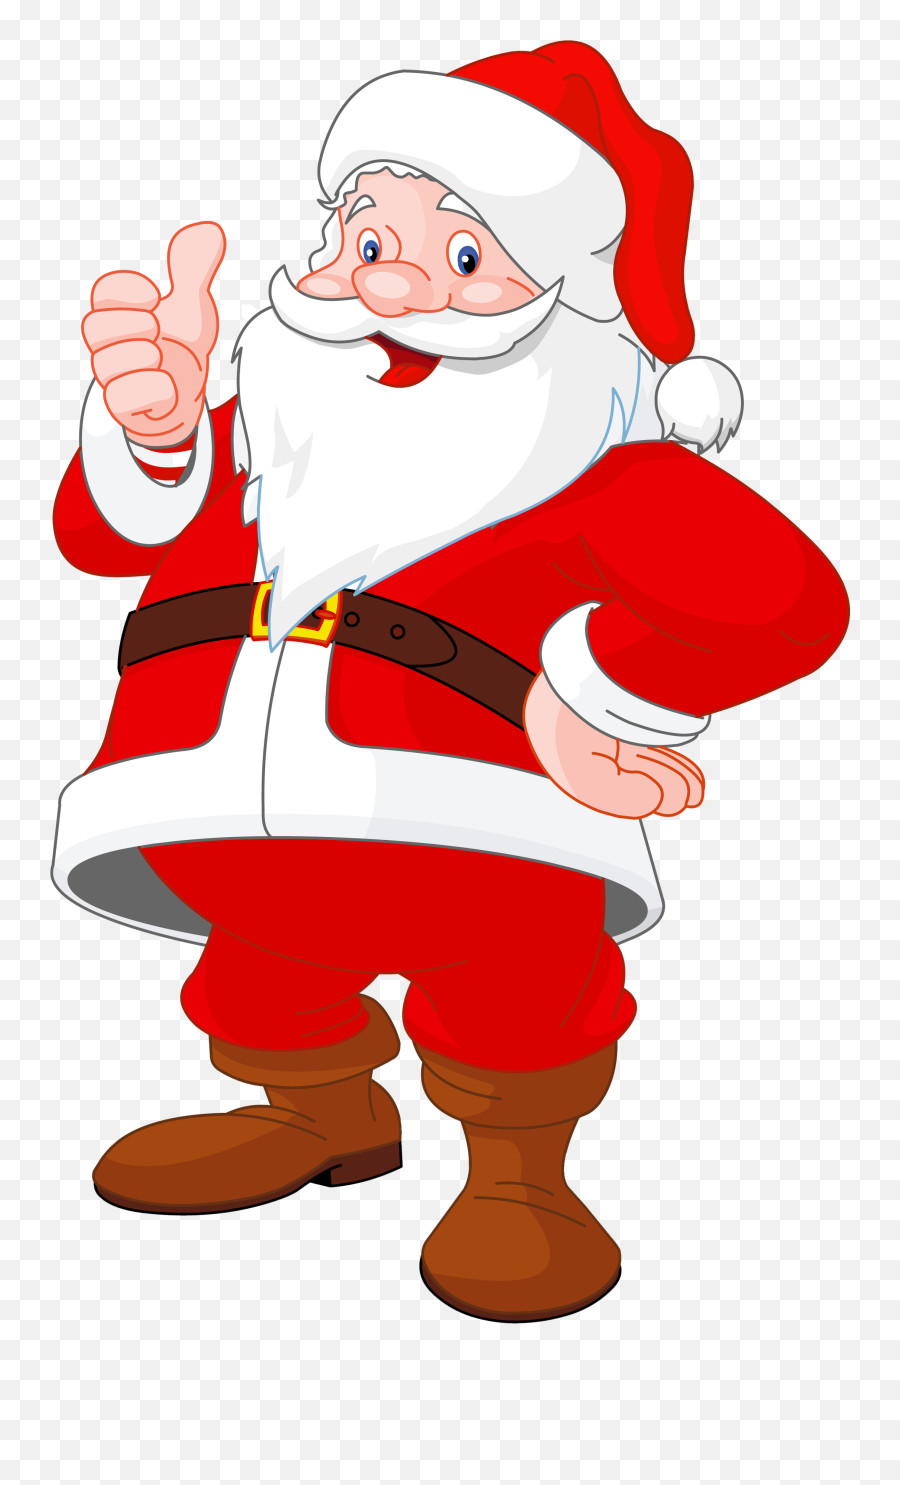 Download Pictures Of Santa Claus - Kabaprefinedtravelerco Santa Claus Image Download Png,Christmas Vector Png